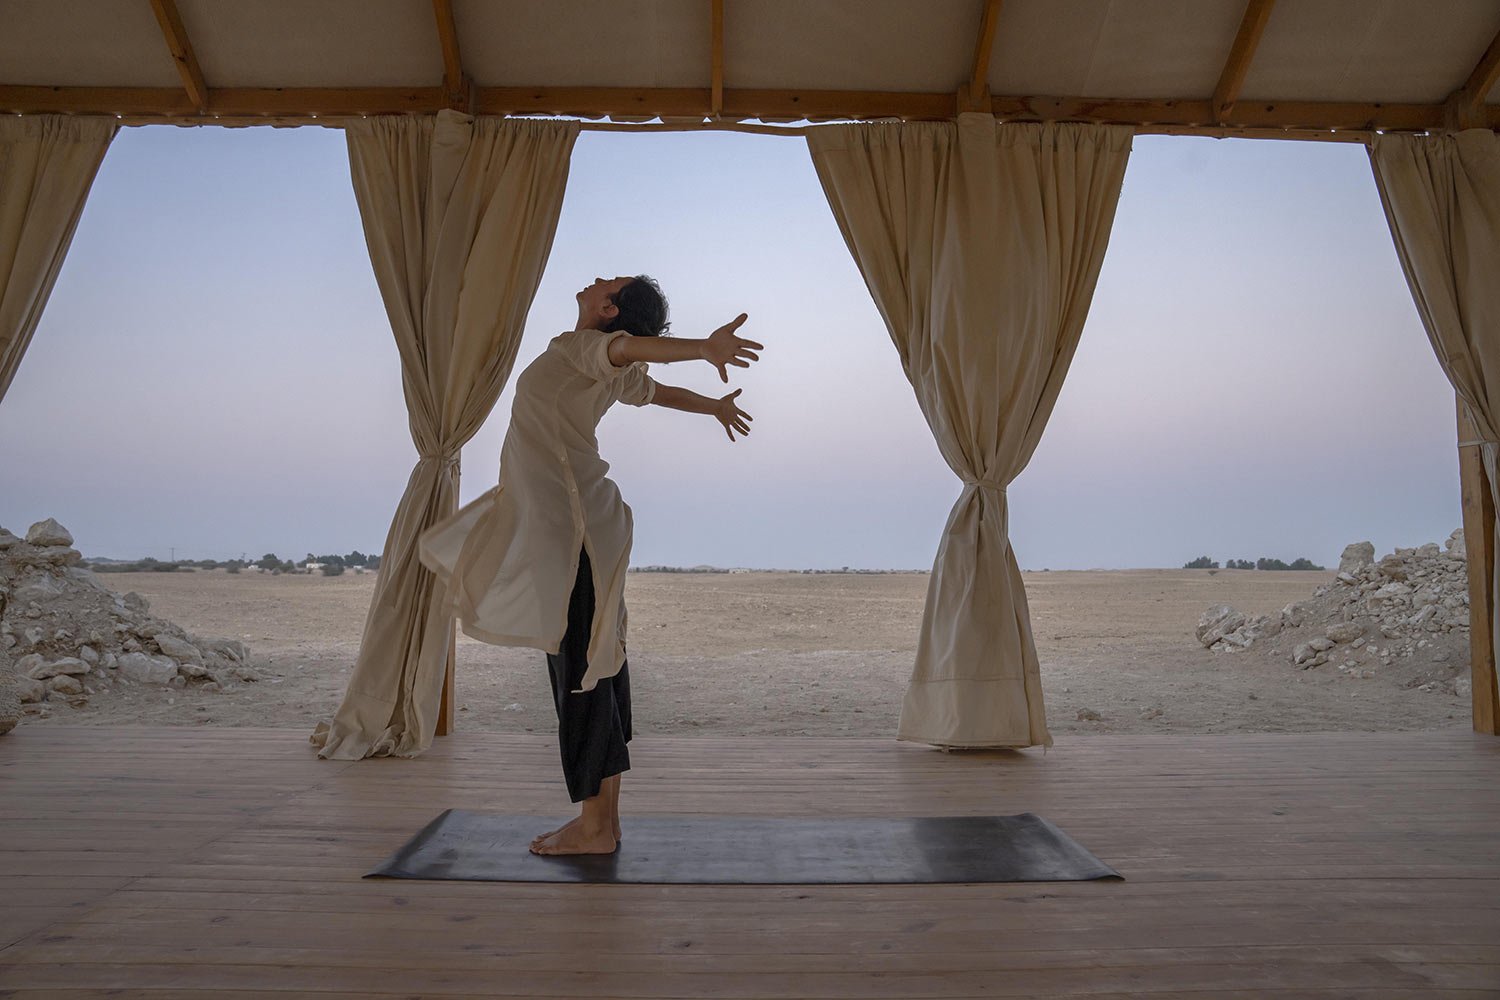  Indian yoga teacher Diksha practices where she gives classes at Heenat Salma farm in Al Shahaniah, Qatar, Wednesday, Oct. 19, 2022. (AP Photo/Nariman El-Mofty) 